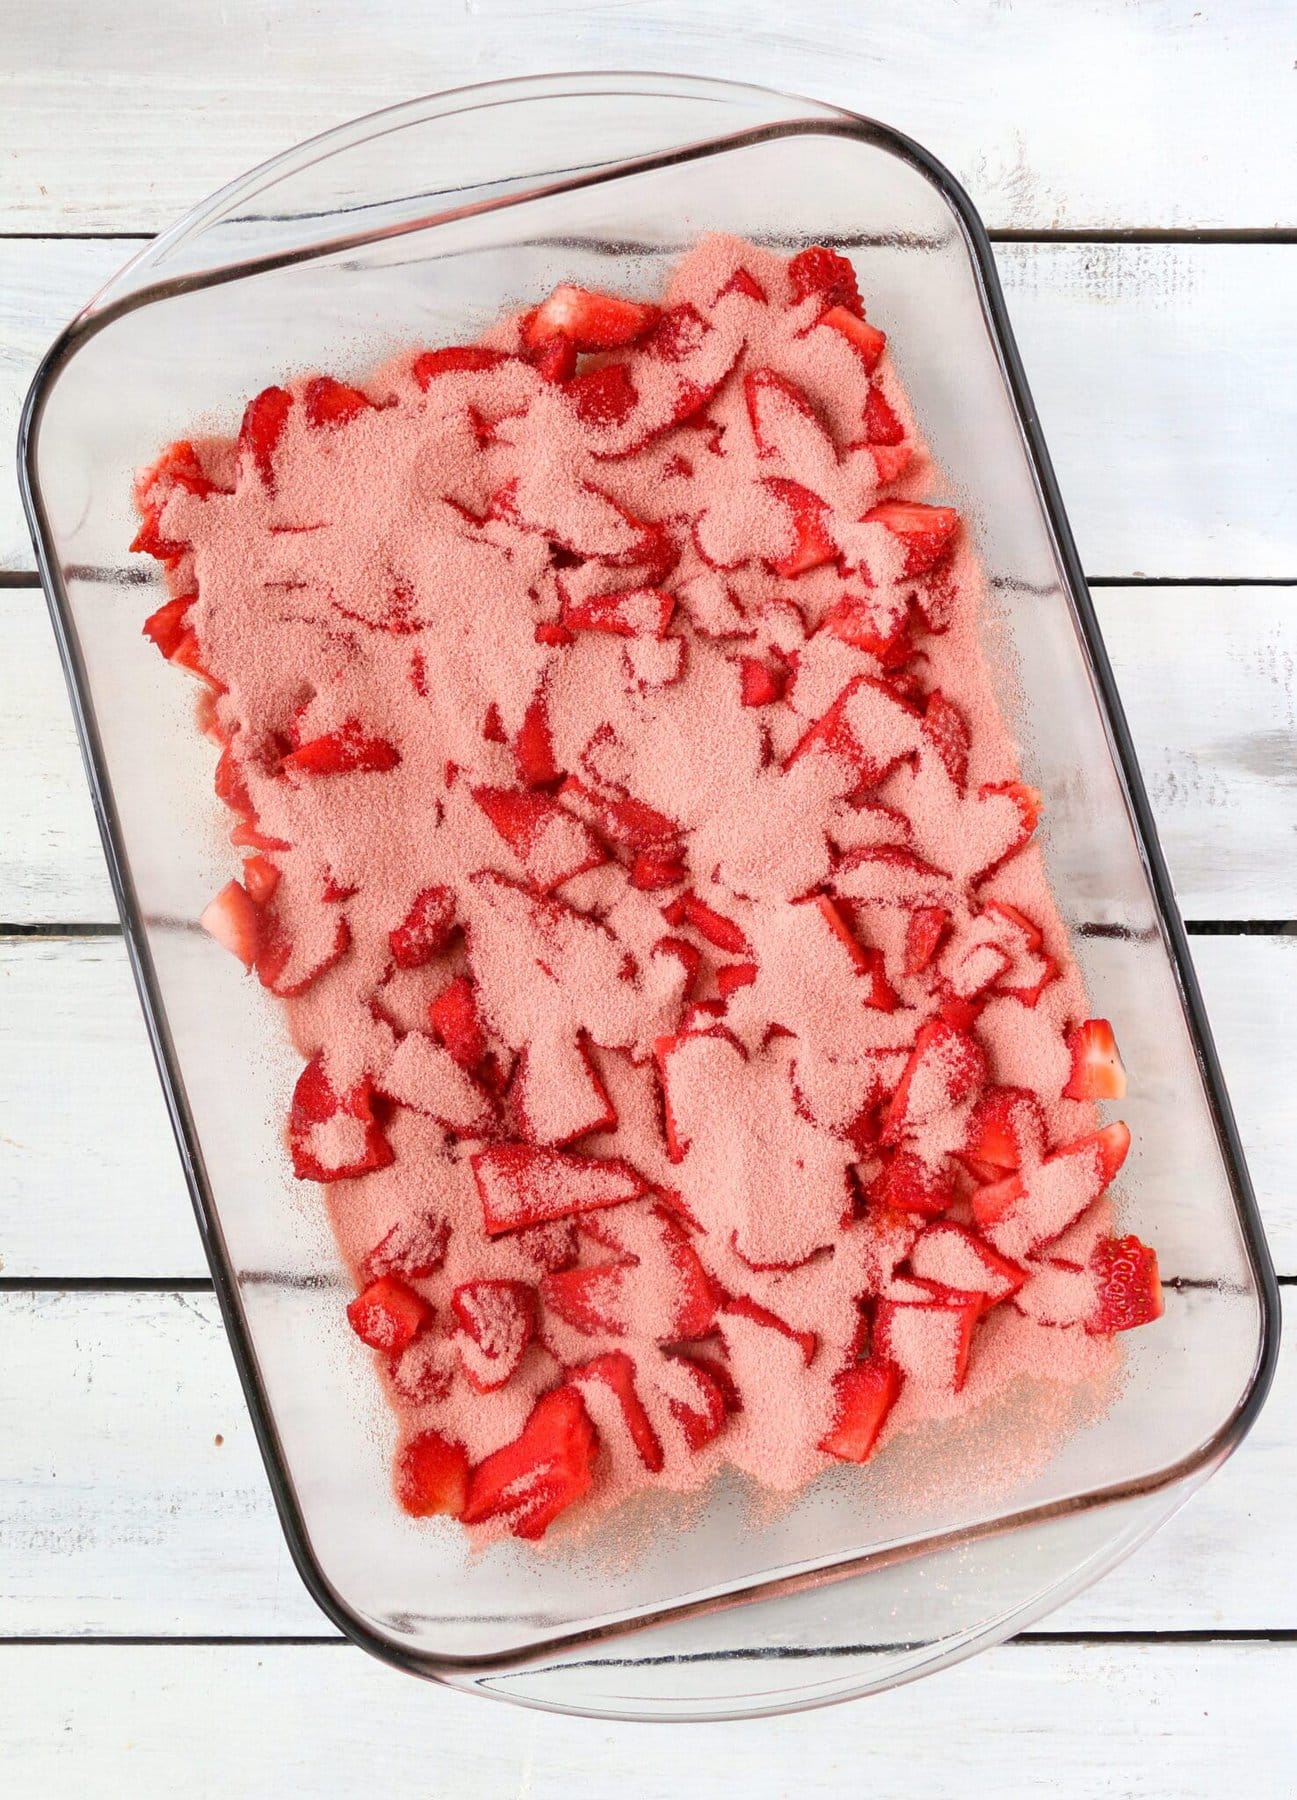 Coating the strawberries in jello mix.